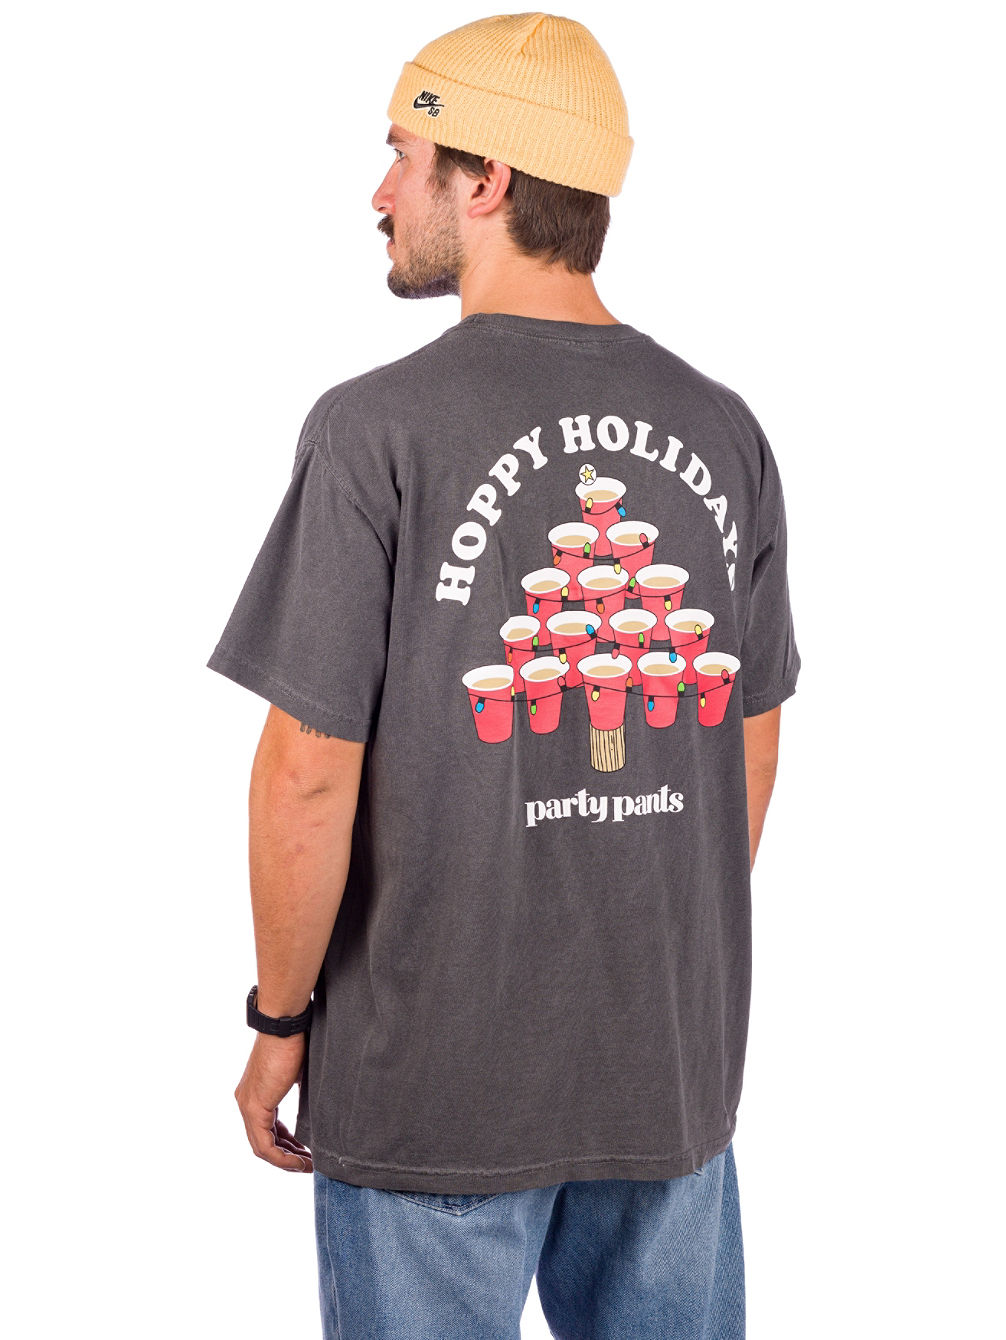 Hoppy Holiday Camiseta